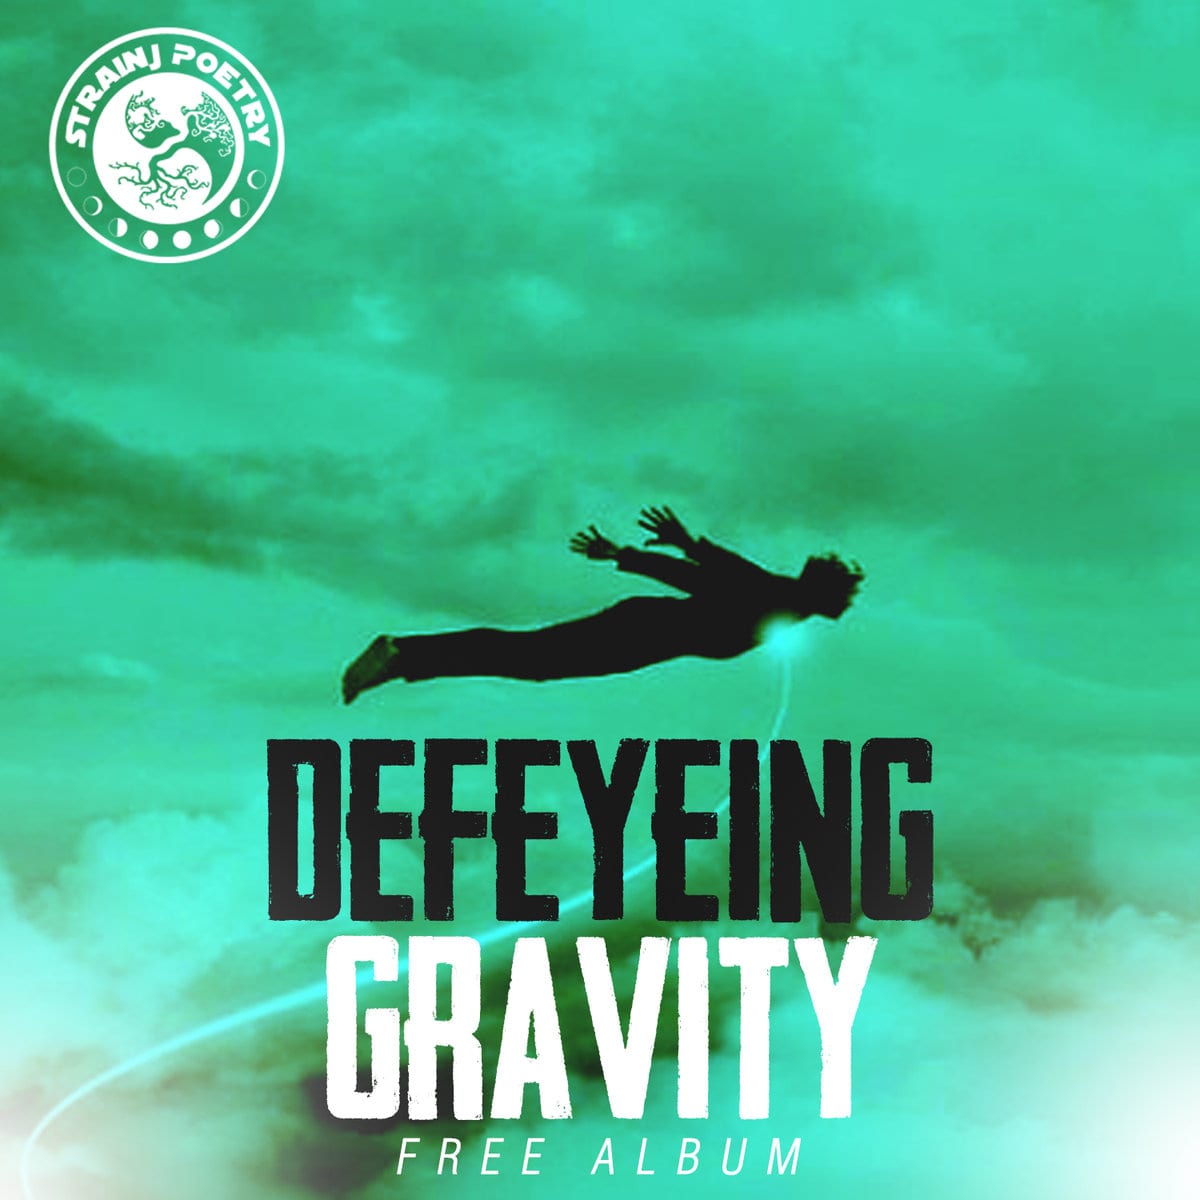 New Album By Strainj Poetry - Defeyeing Gravity